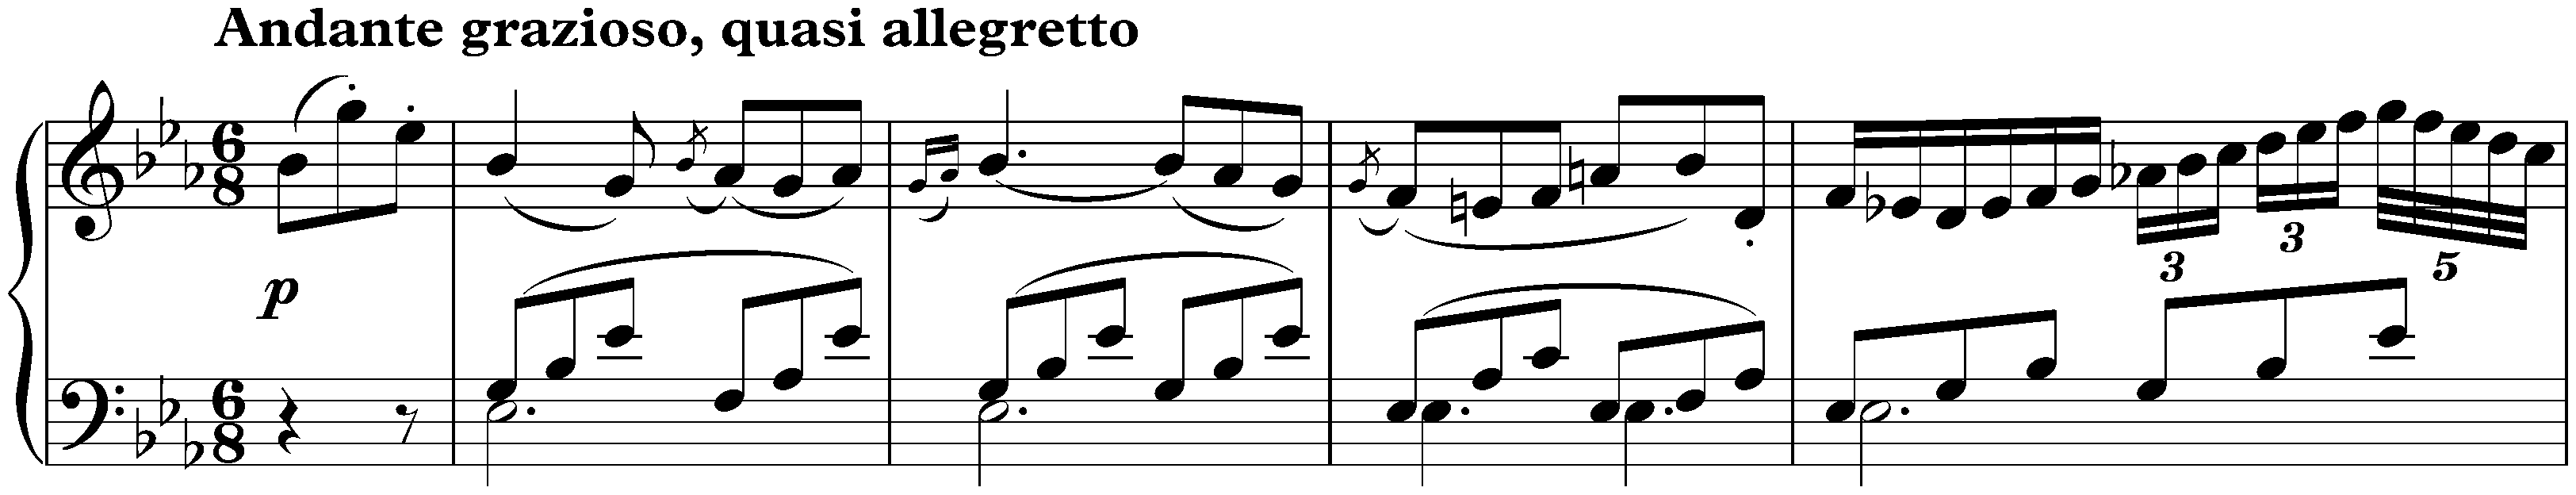 Seven Bagatelles, op. 33; 1. E-flat major